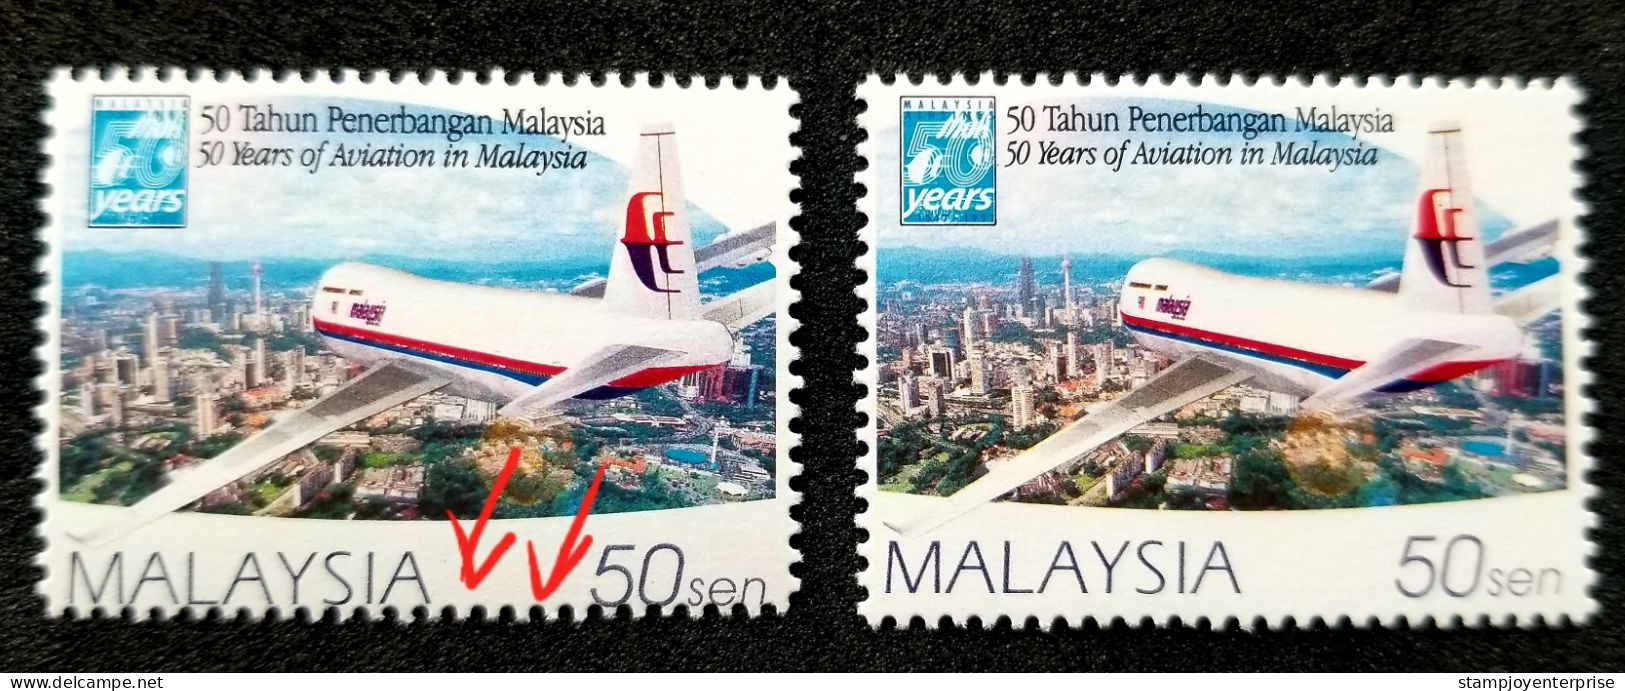 Malaysia 50 Years Aviation 1997 Airplane Transport Vehicle (stamp) MNH *Perf Shift *Error *Rare - Malaysia (1964-...)